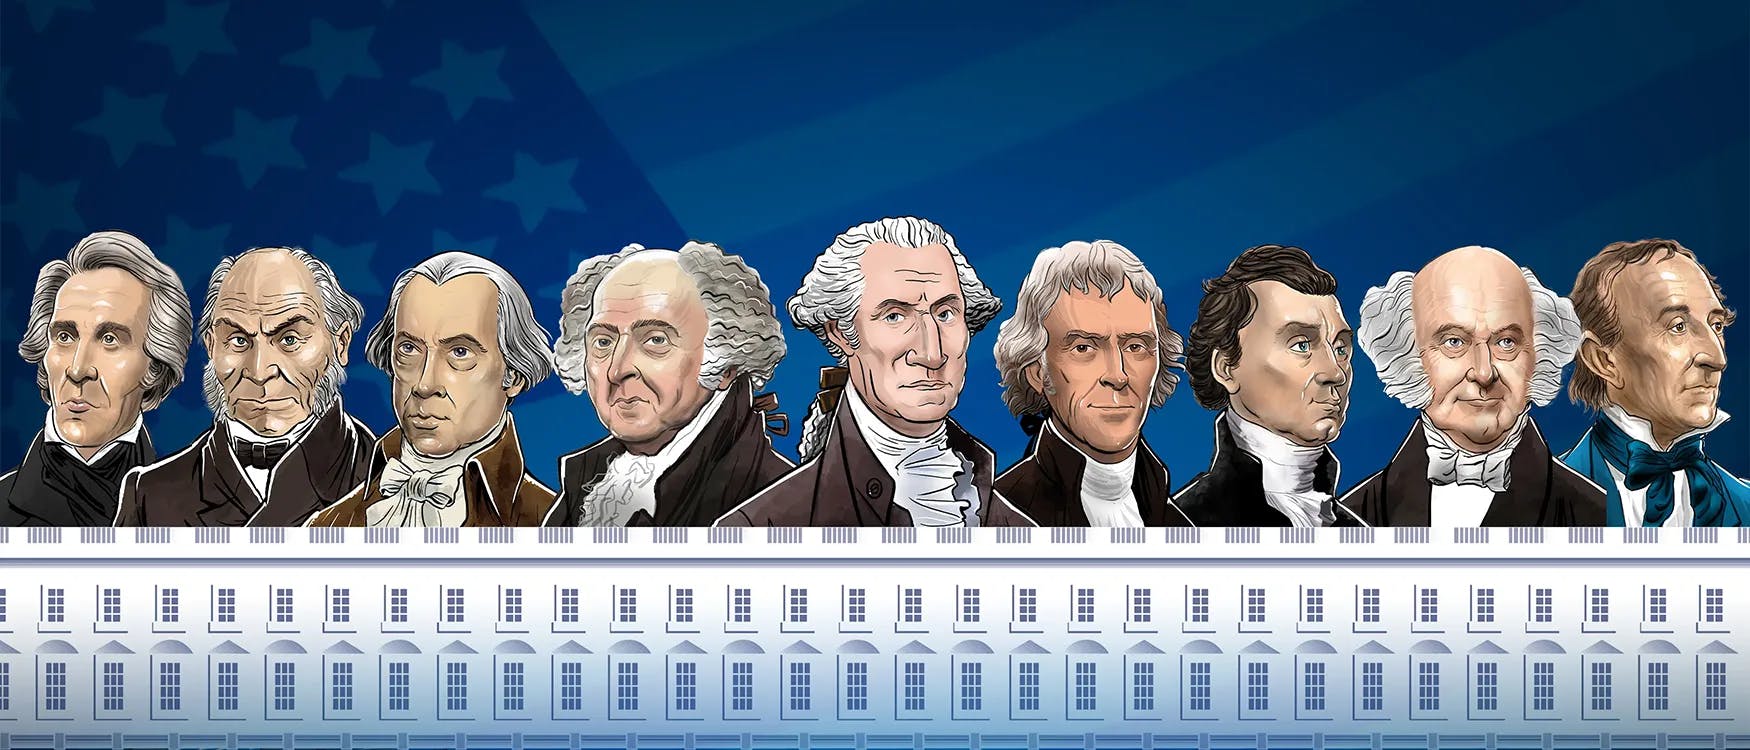 The United States Presidents background image